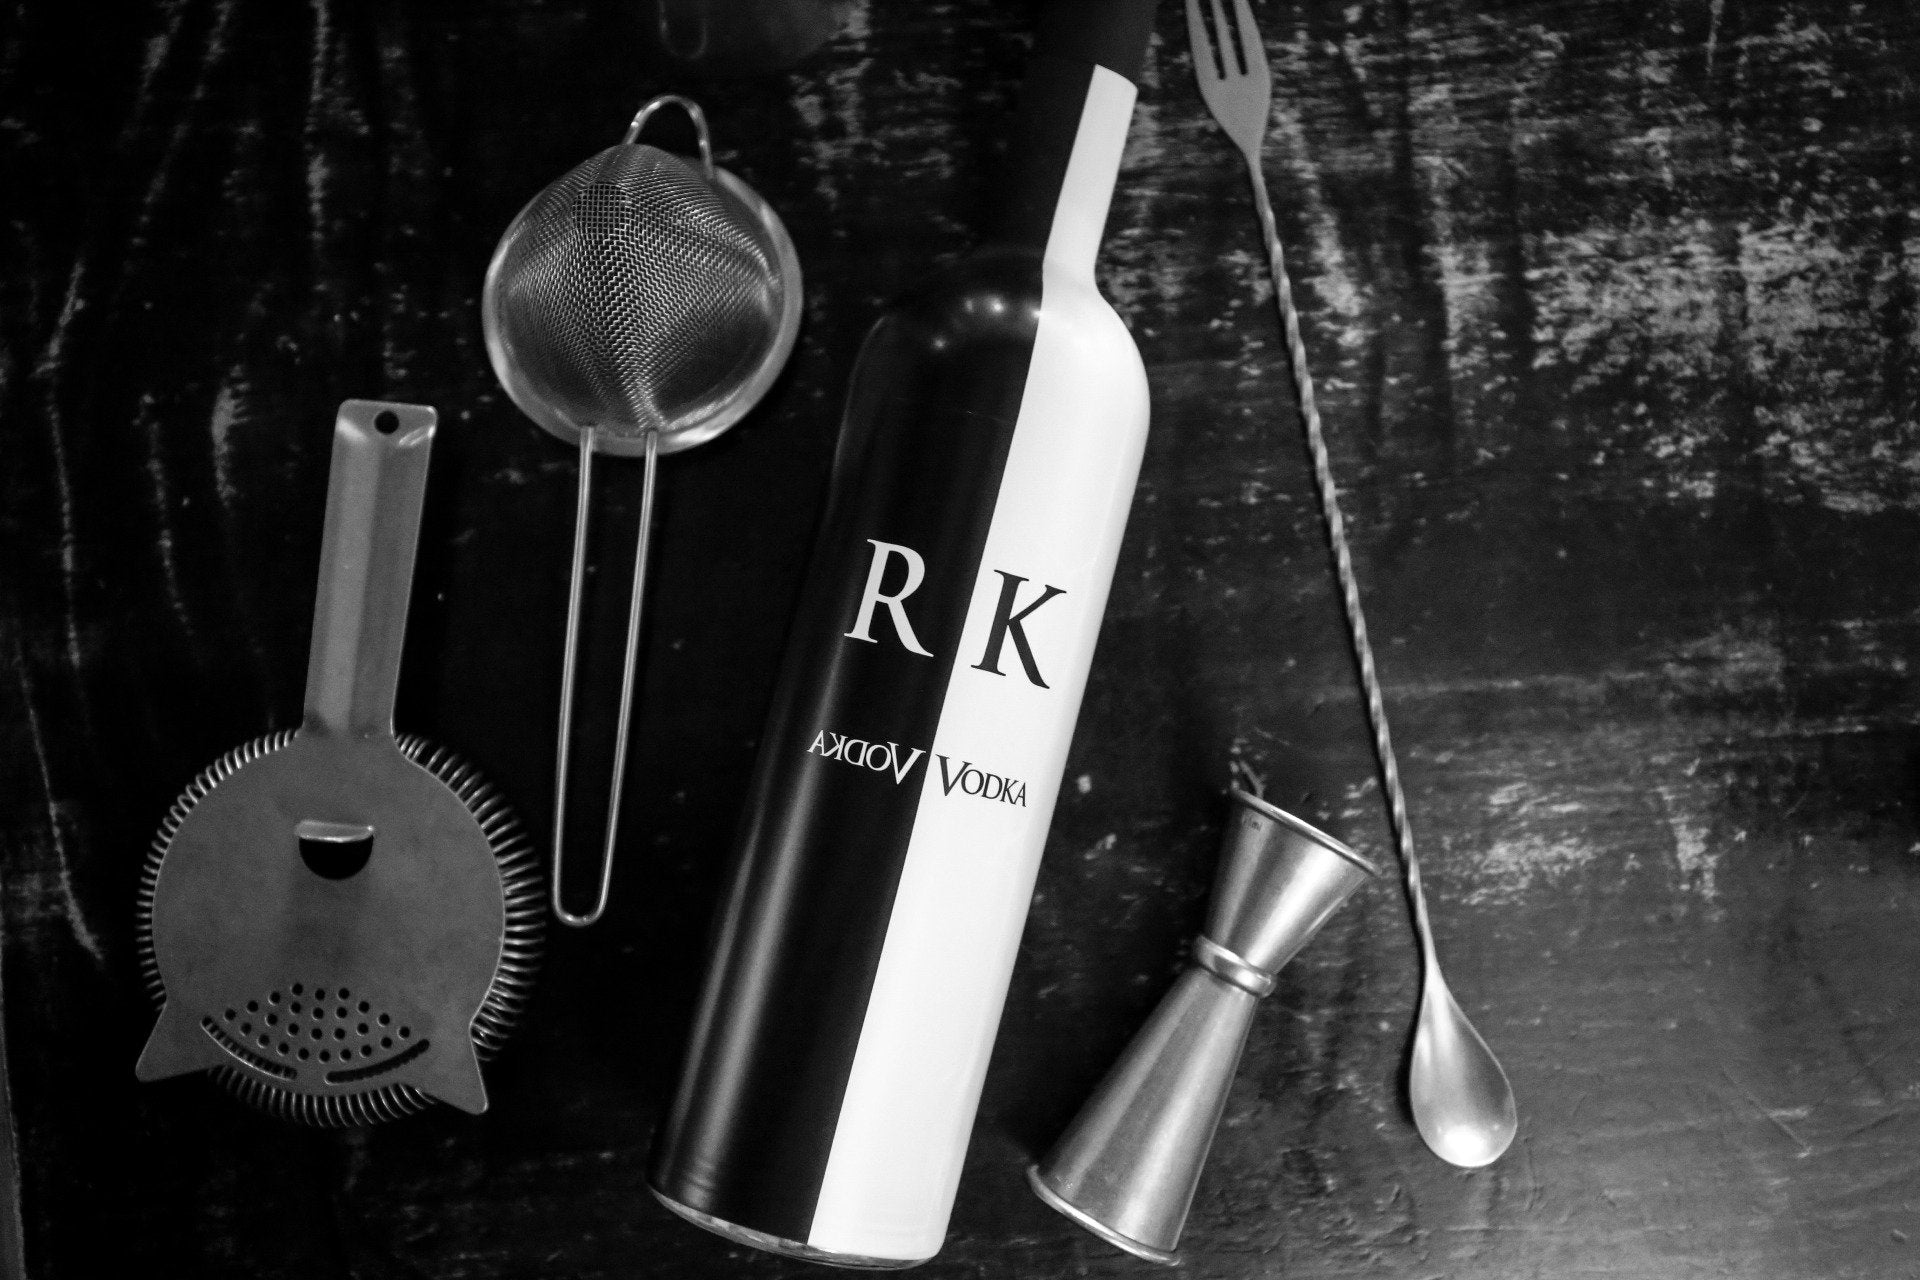 Spotlight on: RK Vodka - SplitsDrinks